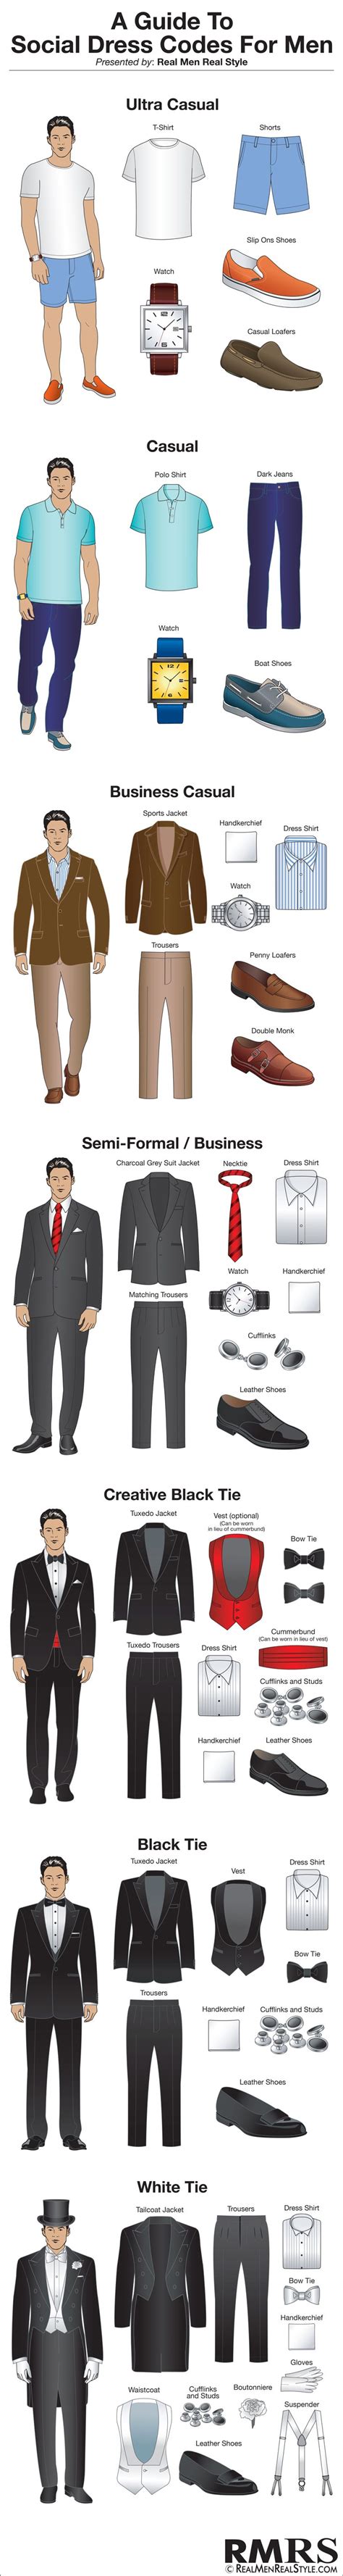 Guide Social Dress Codes For Men Infographic